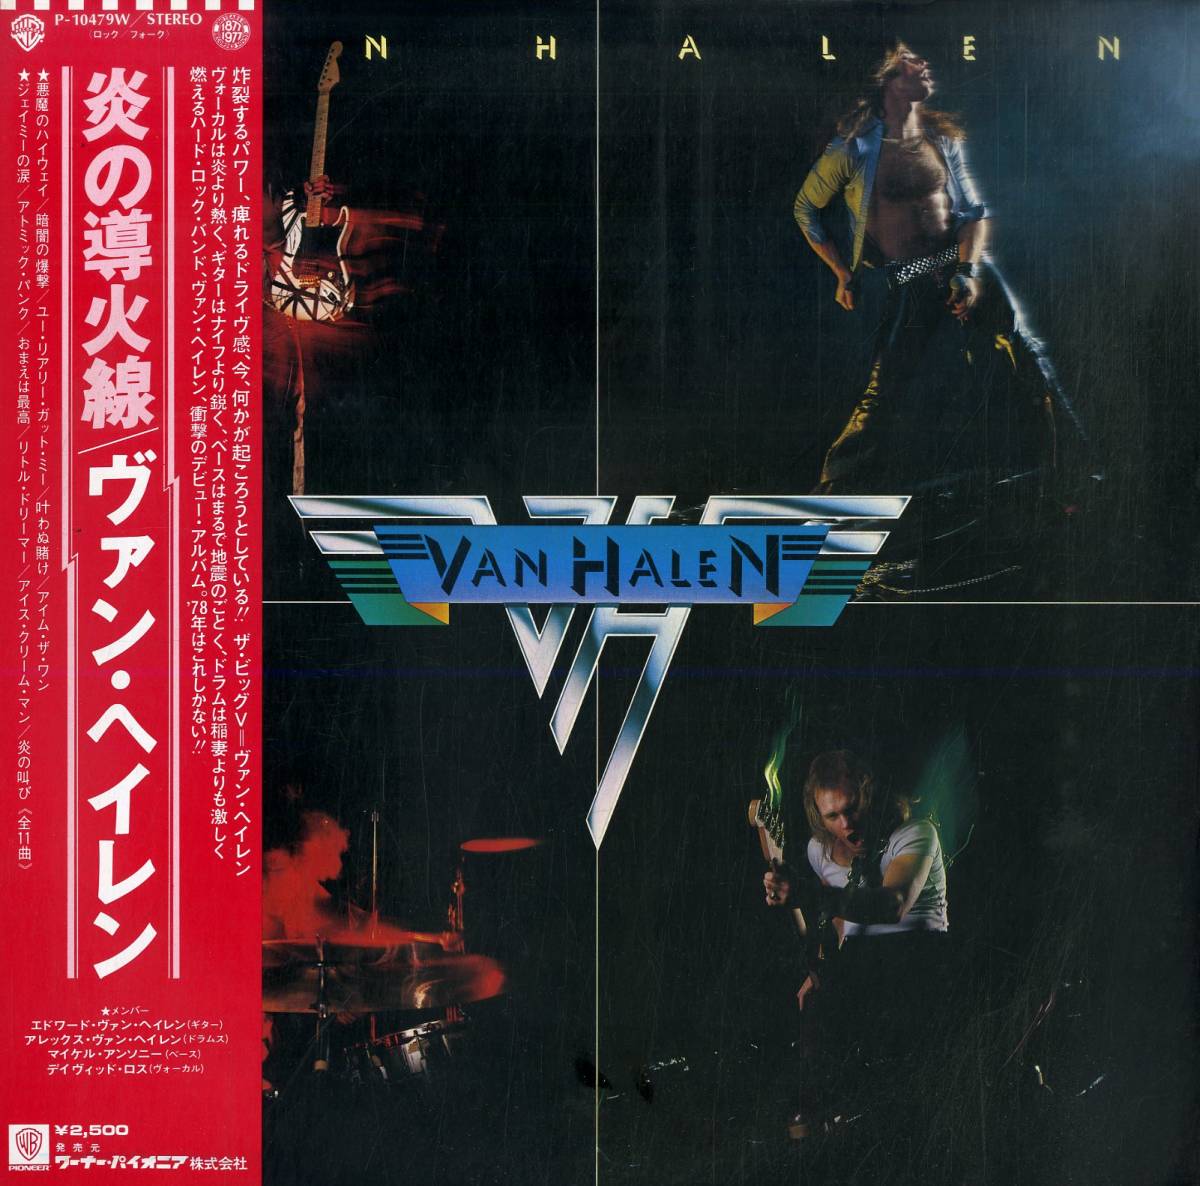 A00579877/LP/ヴァン・ヘイレン (VAN HALEN)「炎の導火線 Van Halen (1978年・P-10479W・ハードロック)」_画像1